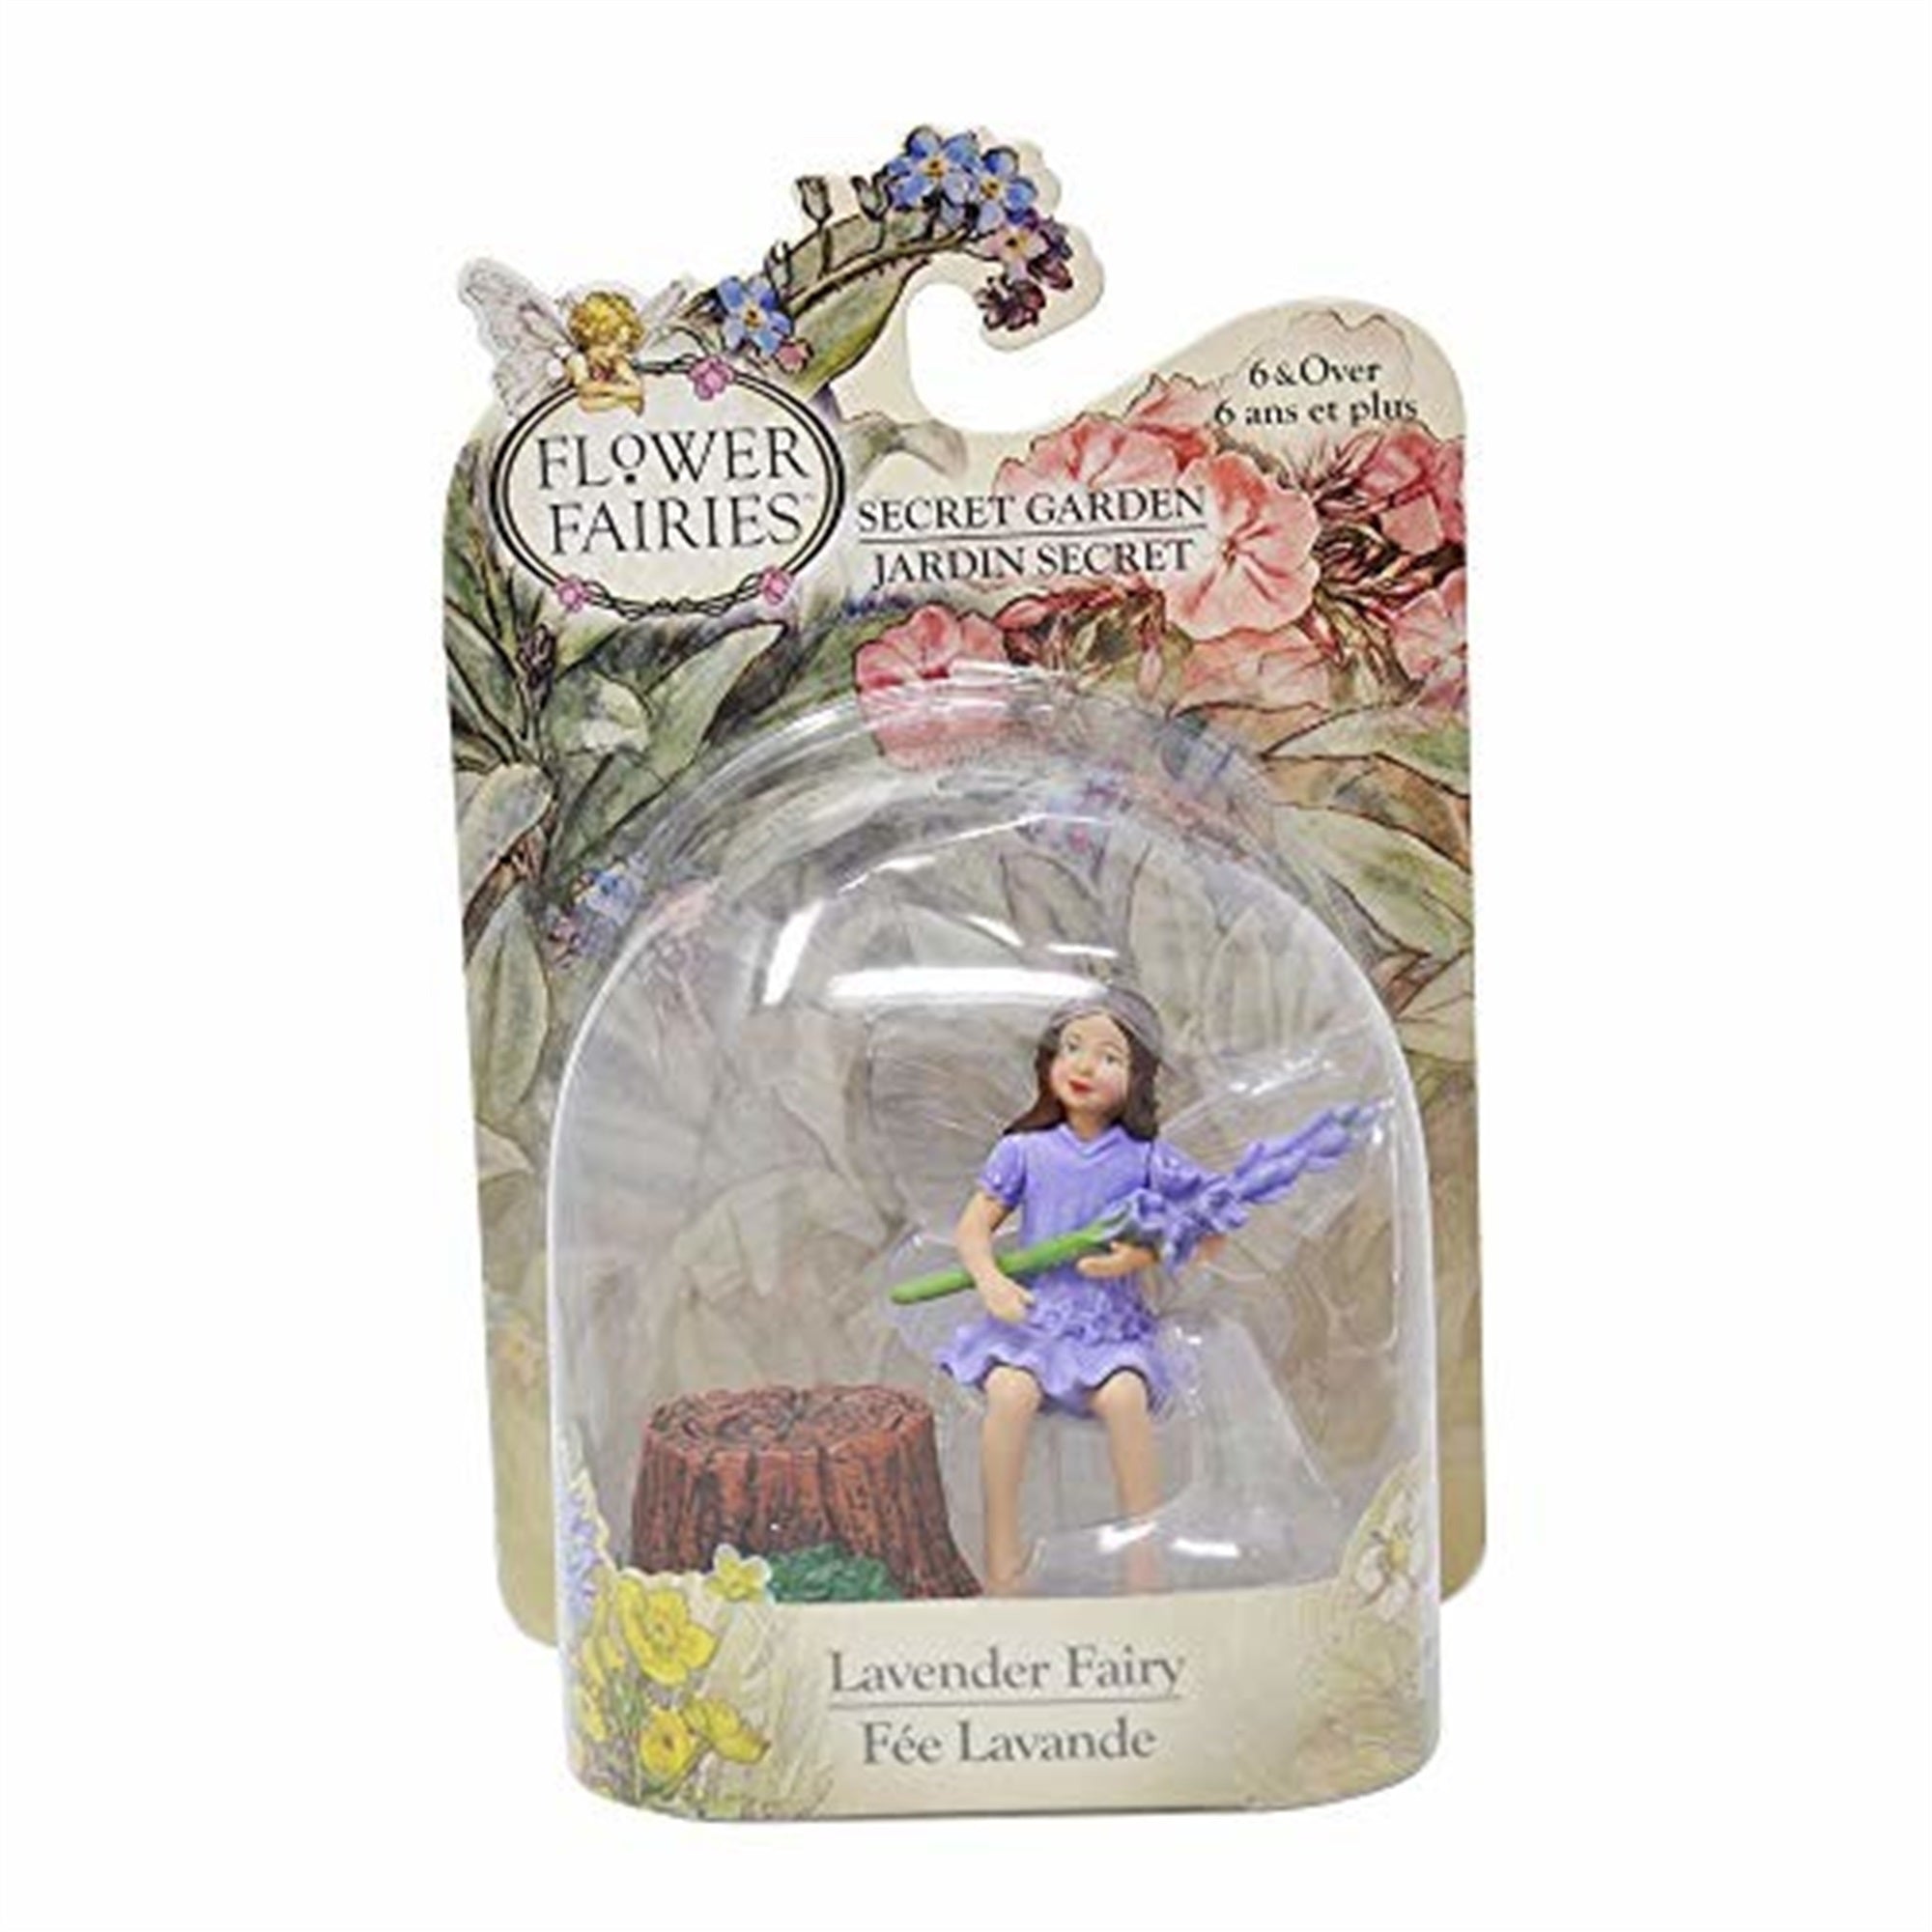 Flower Fairies Secret Garden Fairies Lavender Fairy